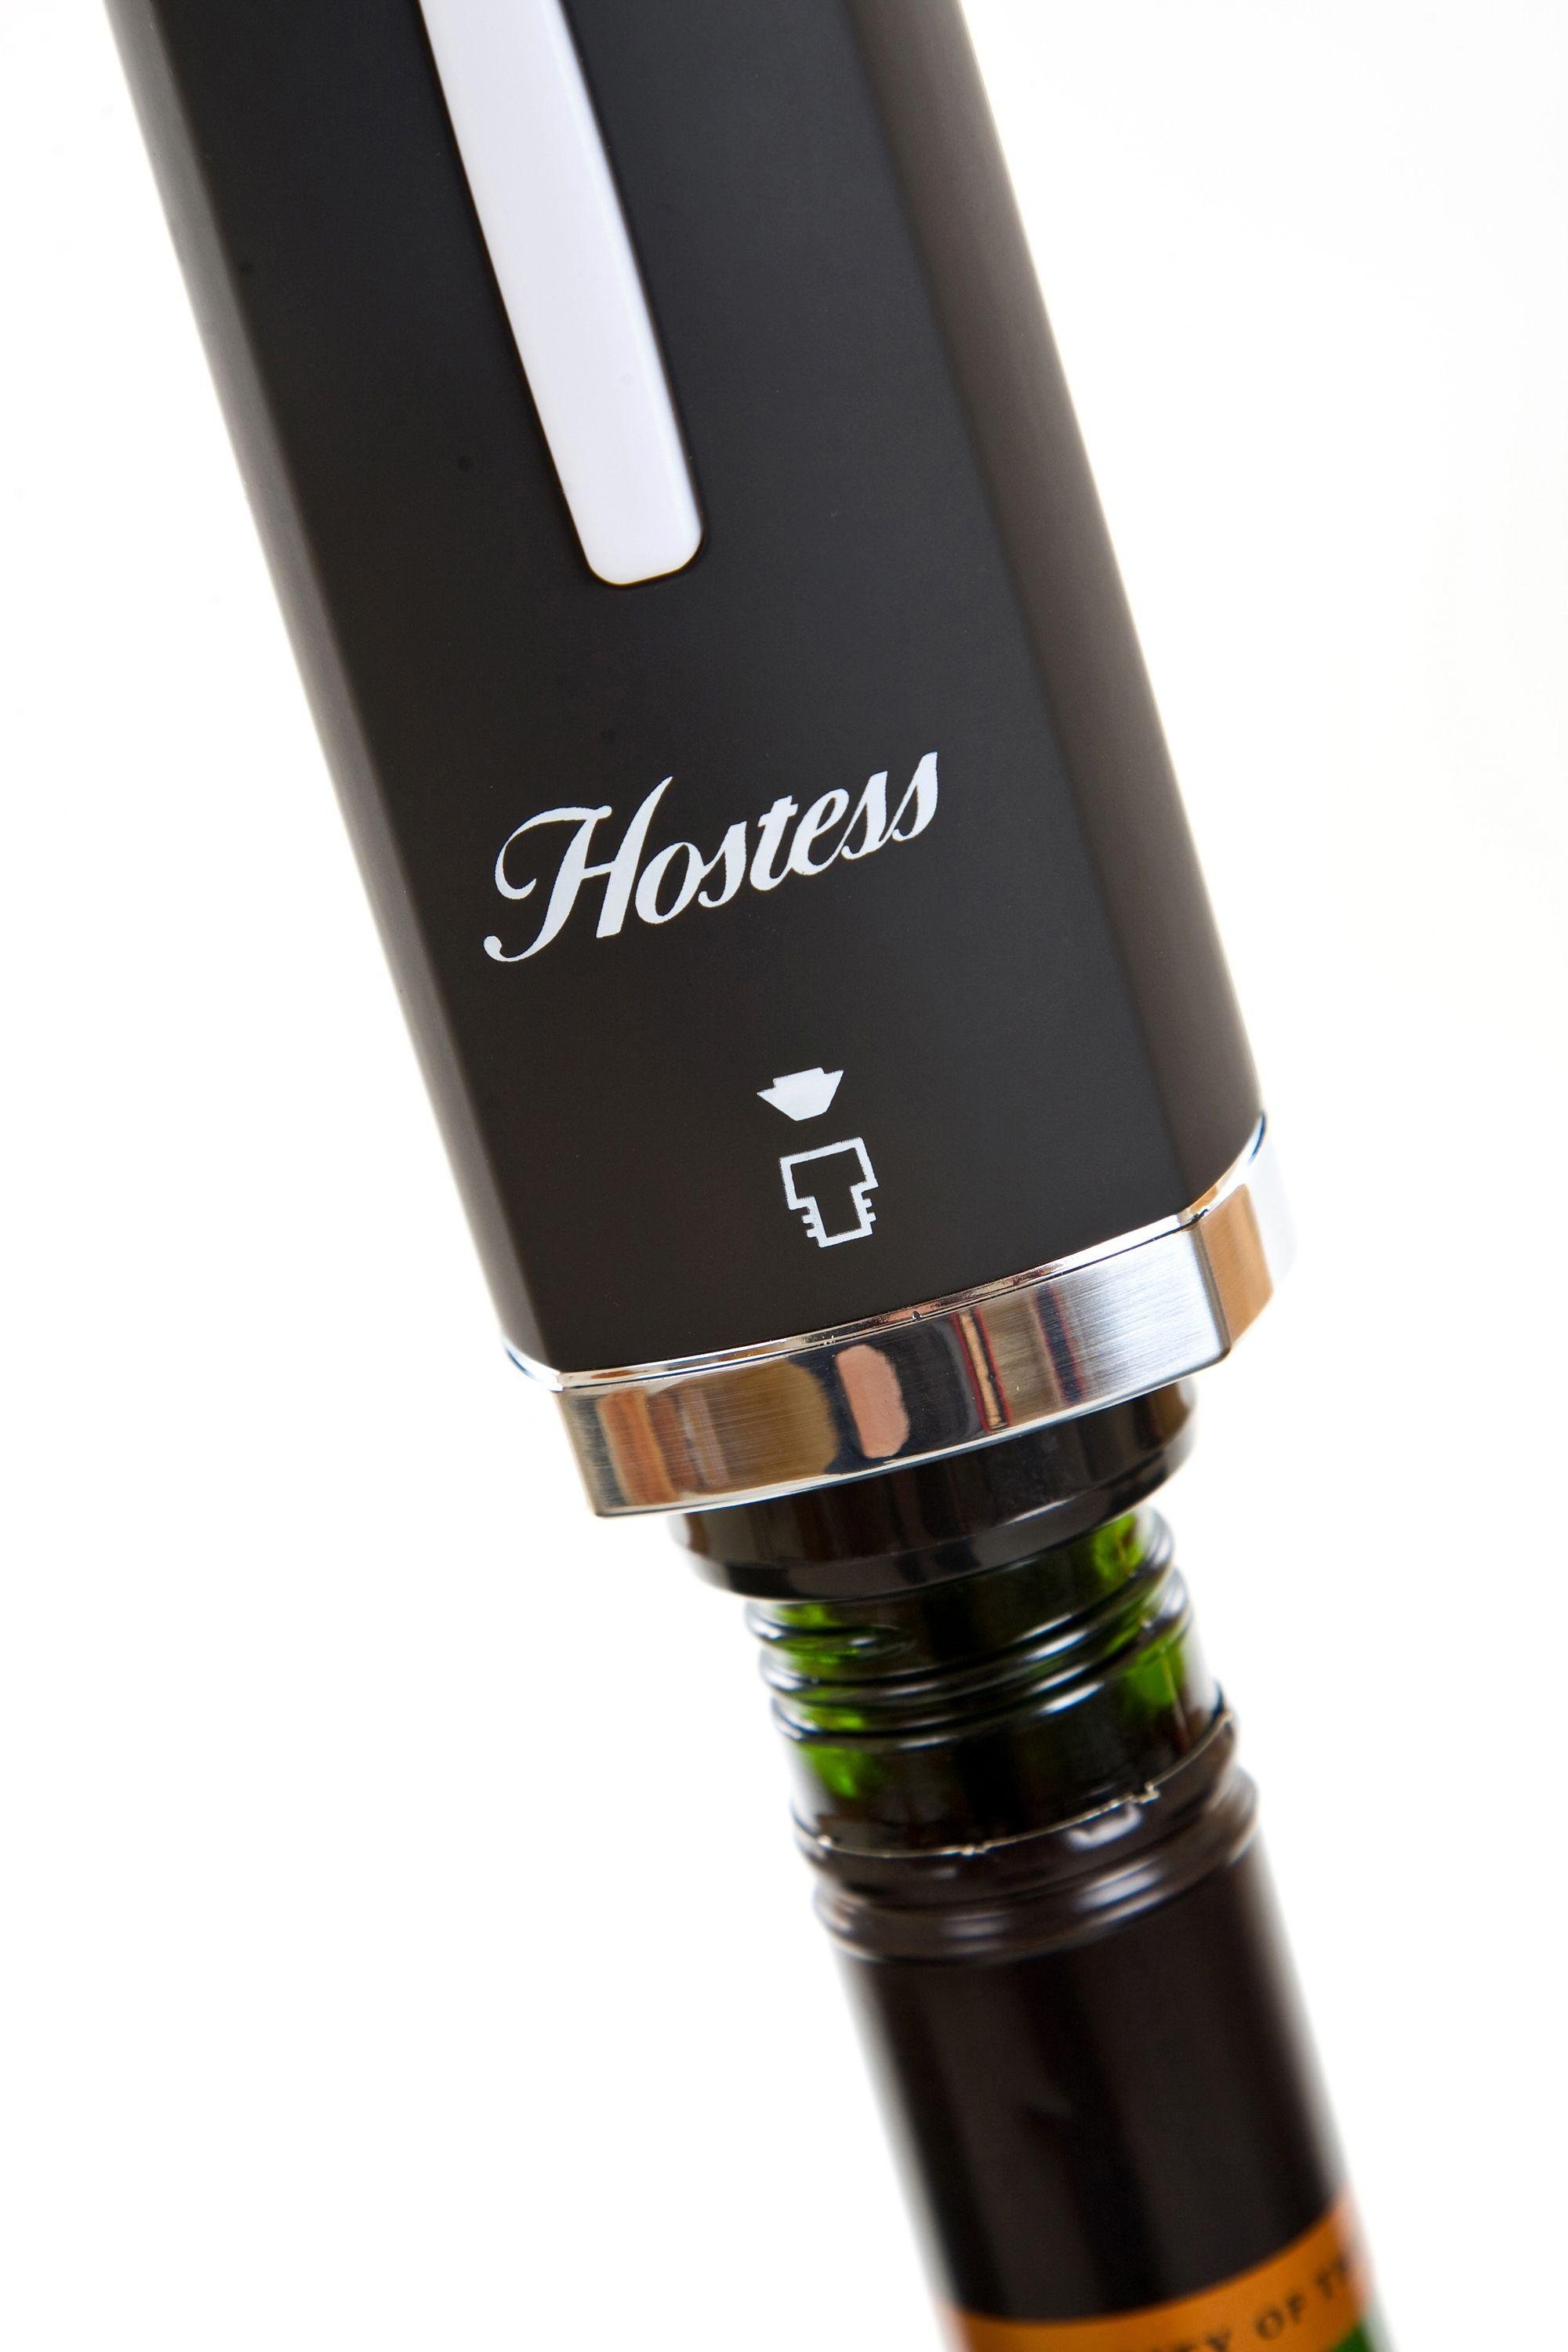 Hostess WP00RA Wine Preserver - Black